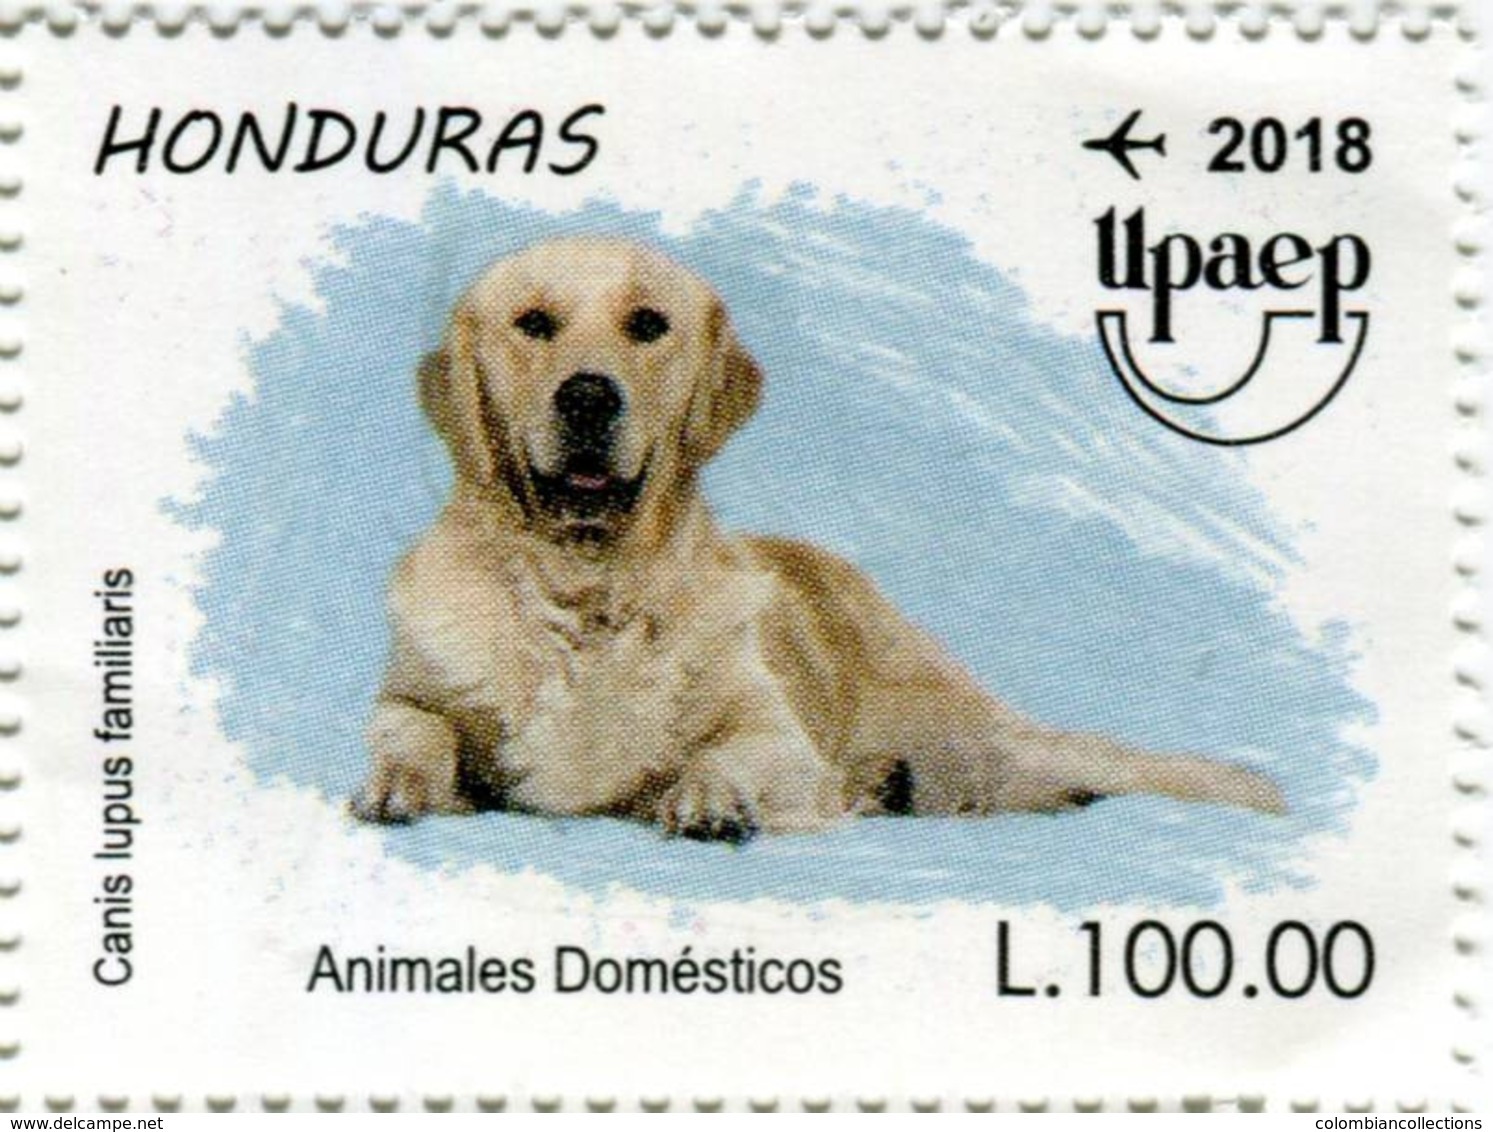 Lote H20, Honduras, 2018, Sello, Stamp, Upaep, Animales Domesticos, Perro, Dog - Honduras